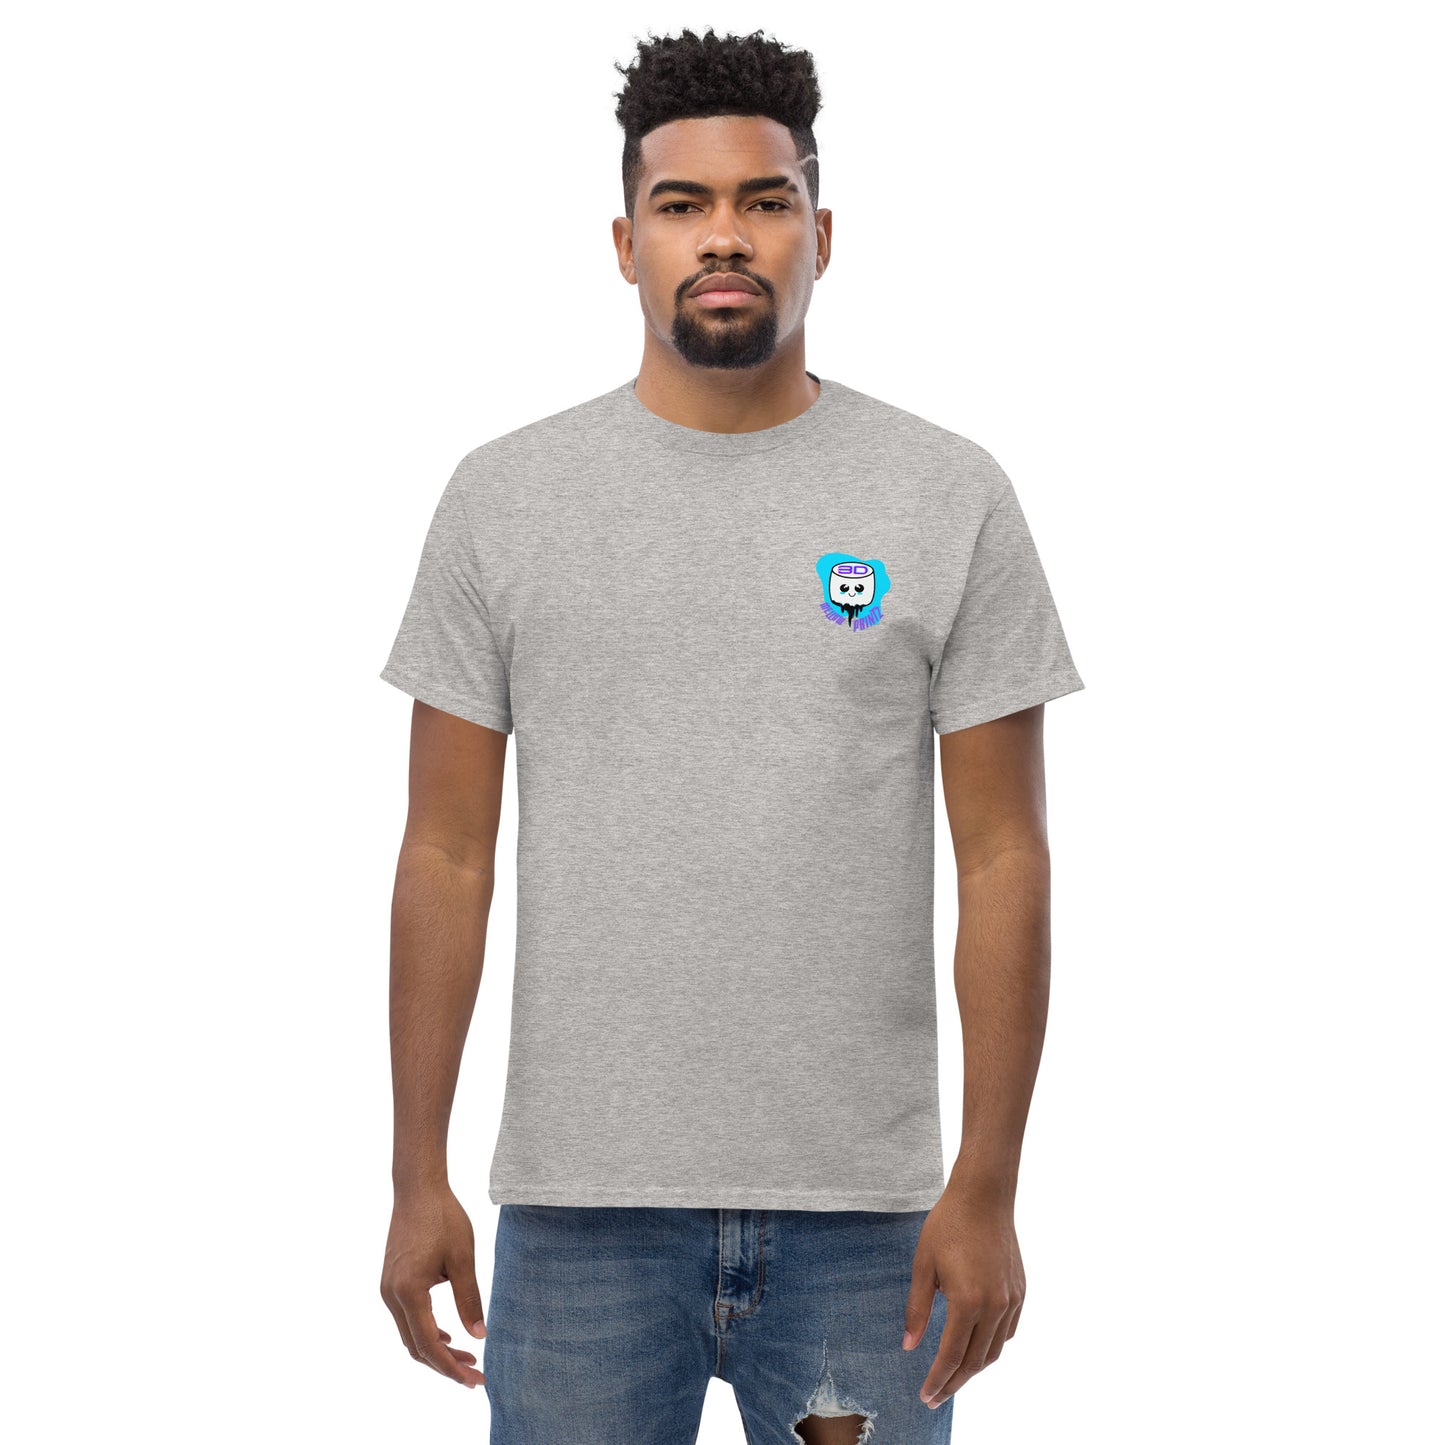 SWAG SHIRTZ | Men's "Shop" Shirt